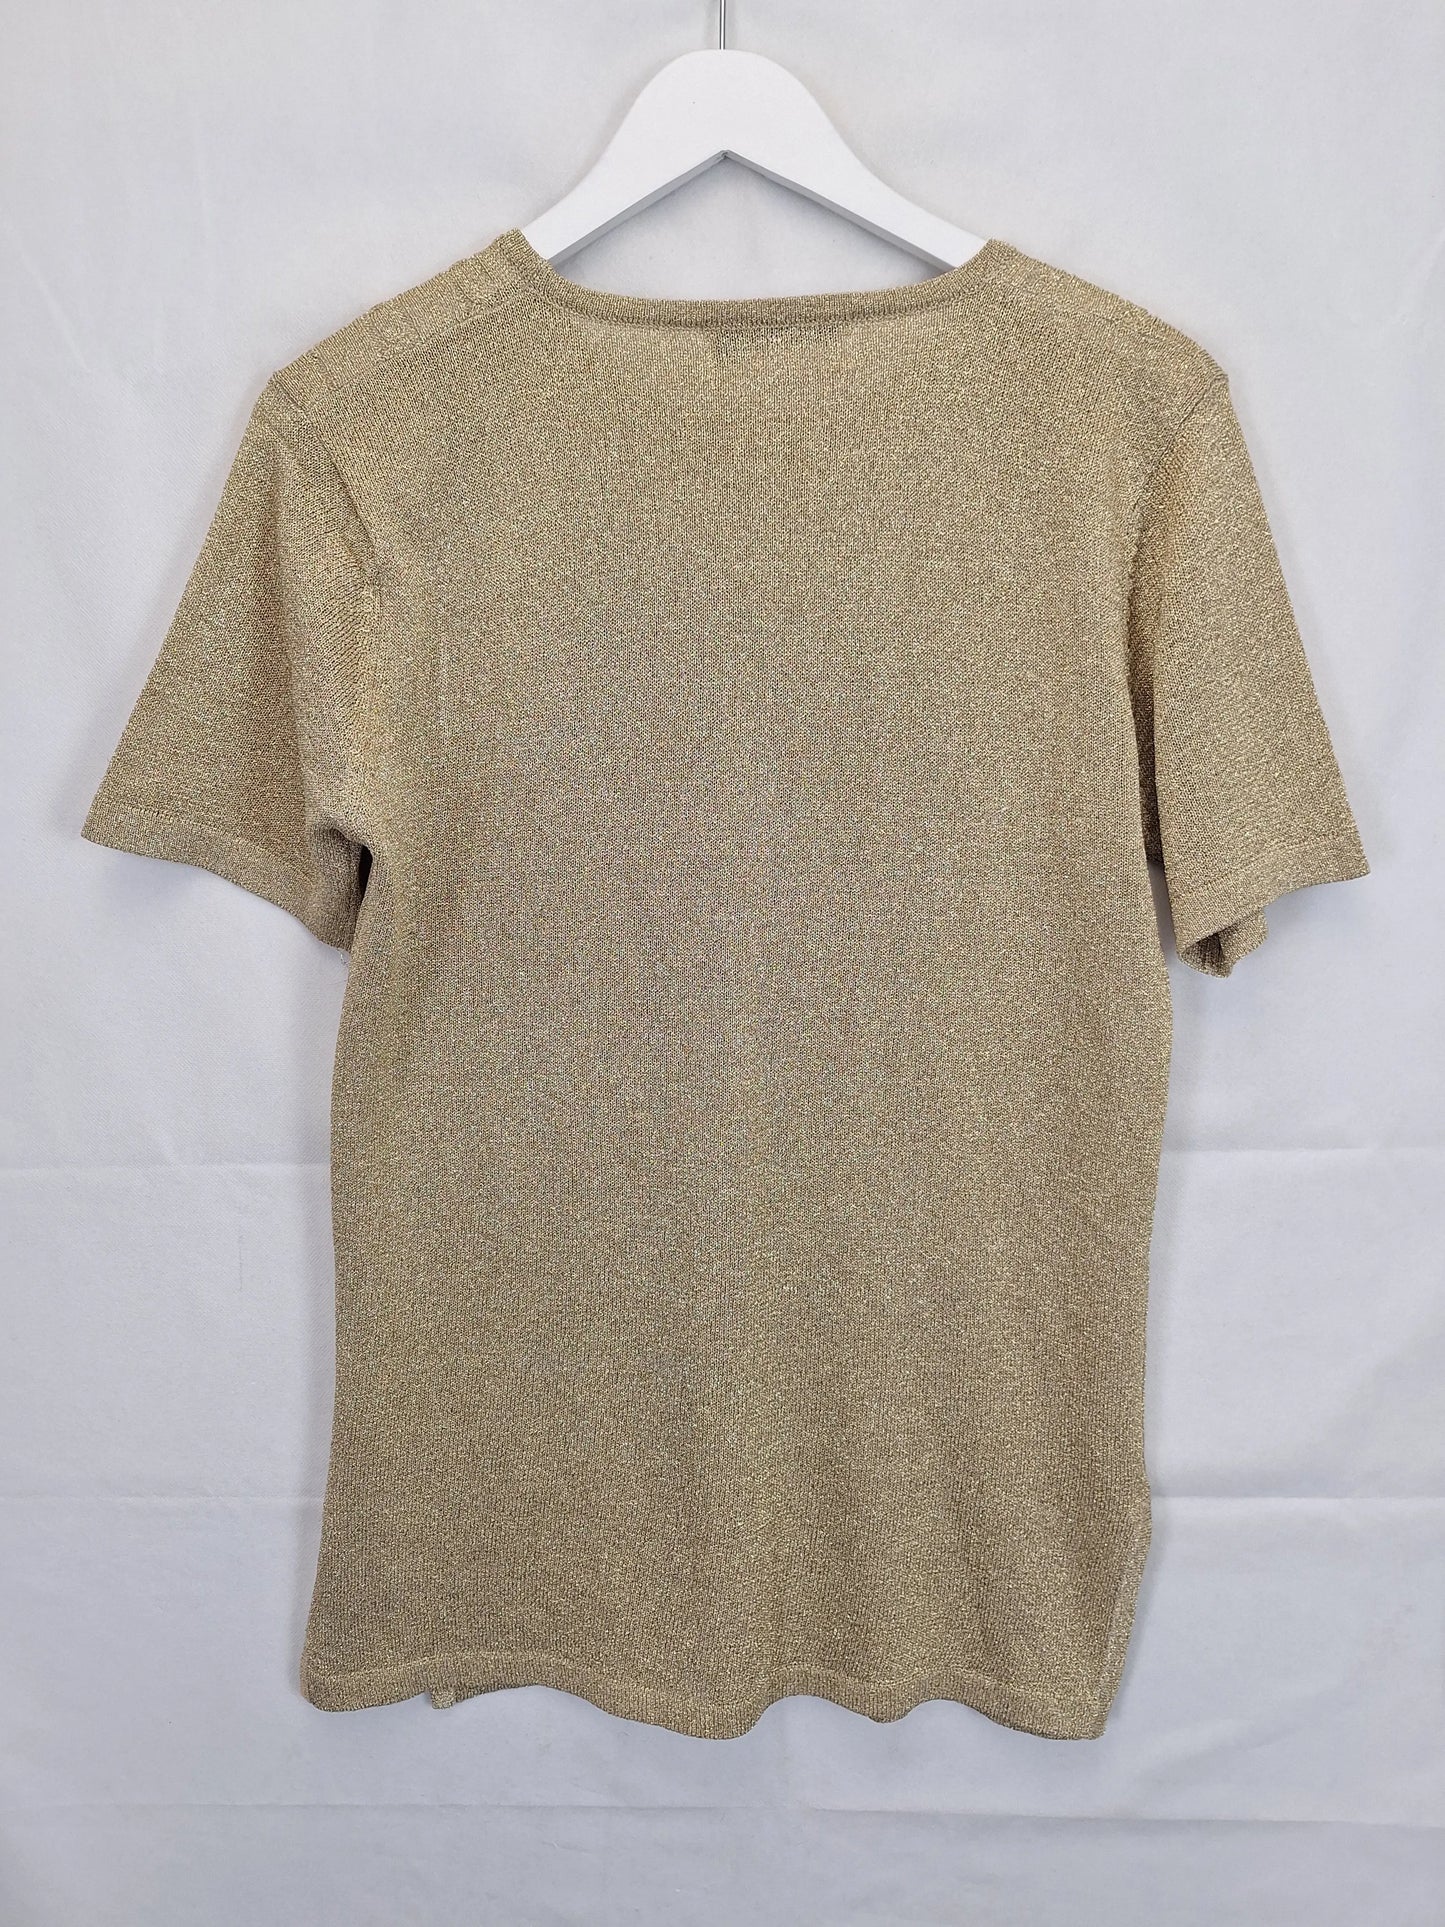 Sandra Steiner Gold Metallic Knit Top Size S by SwapUp-Online Second Hand Store-Online Thrift Store